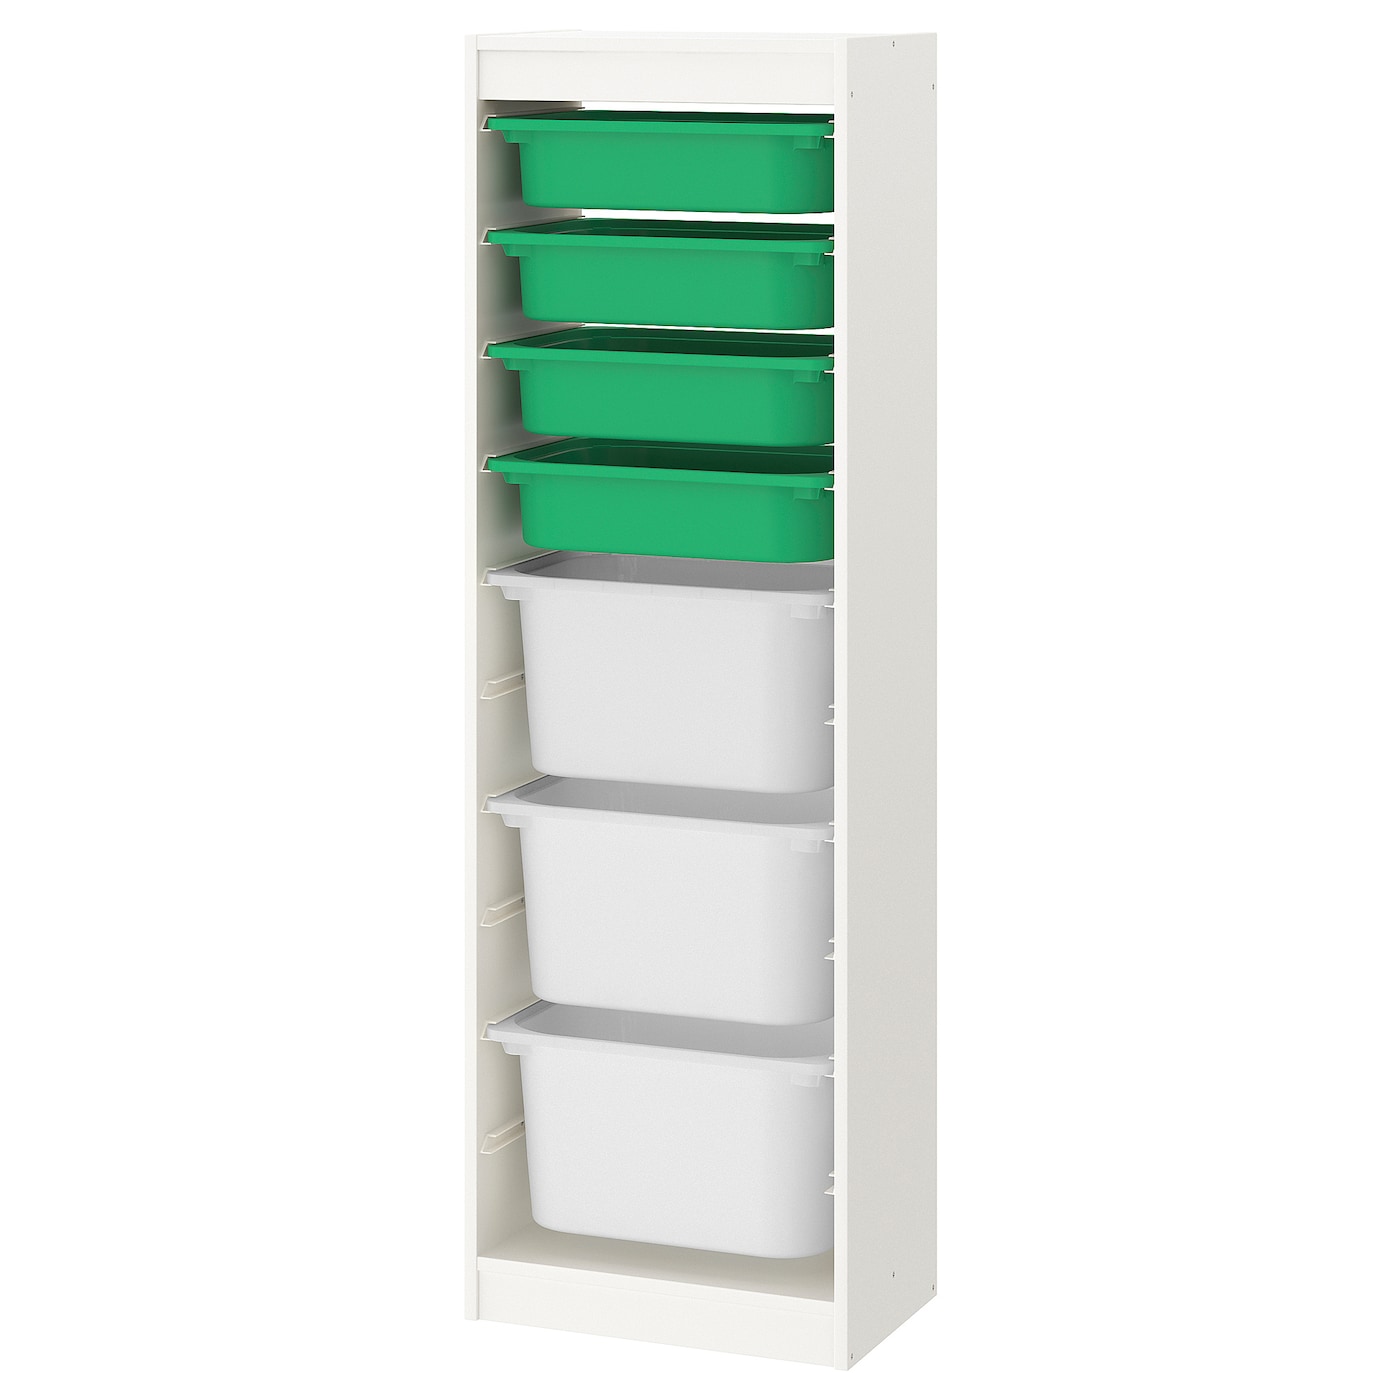 Стеллаж - IKEA TROFAST, 46х30х145 см, белый/зеленый, ТРУФАСТ ИКЕА